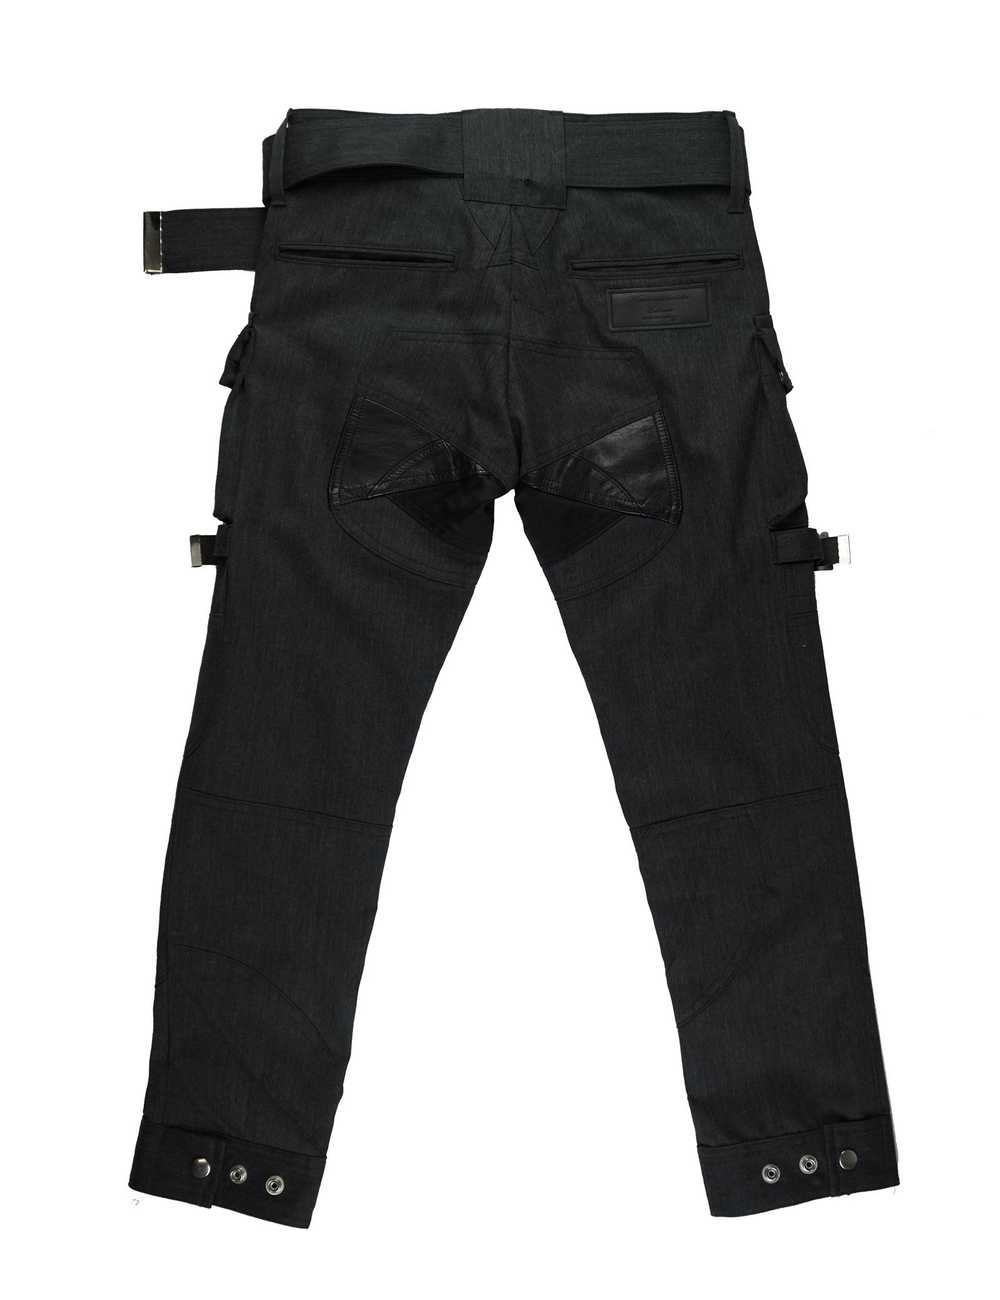 Undercover AW08 Gray Wool Bondage Pants - image 2